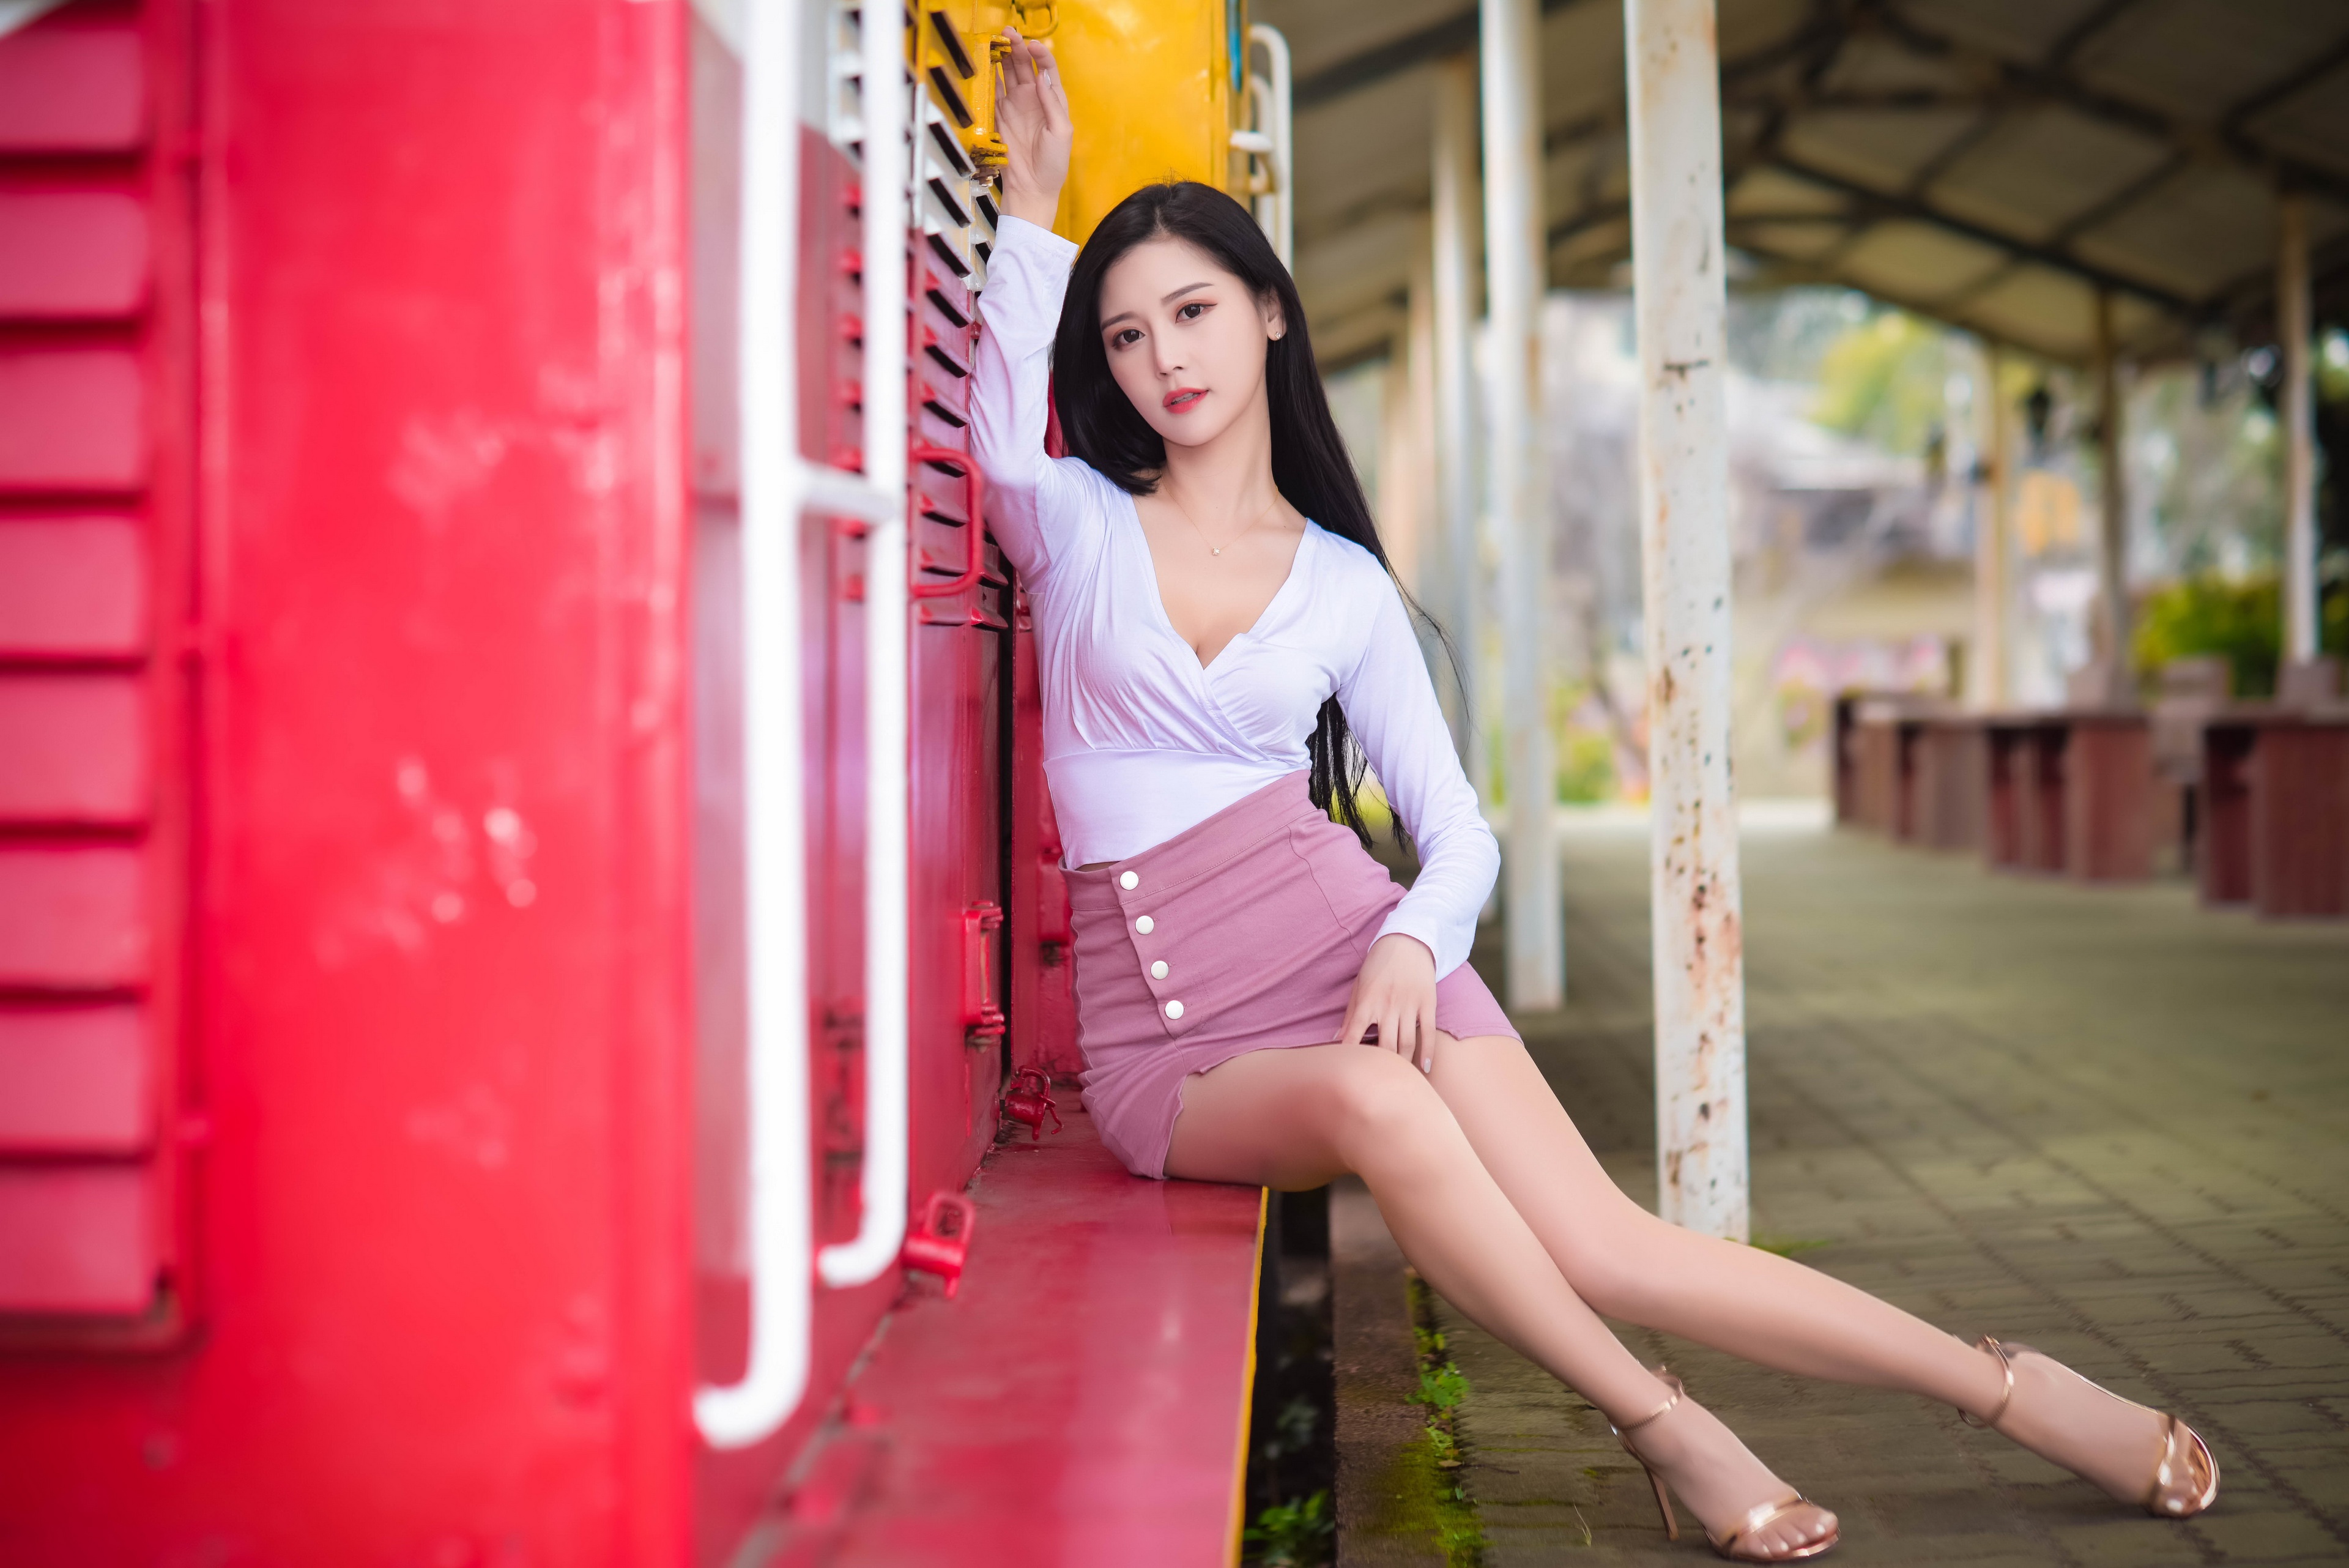 Women Asian Model Women Outdoors Urban Black Hair Skirt Legs Heels Golden Heels Vehicle Locomotive L 3840x2563